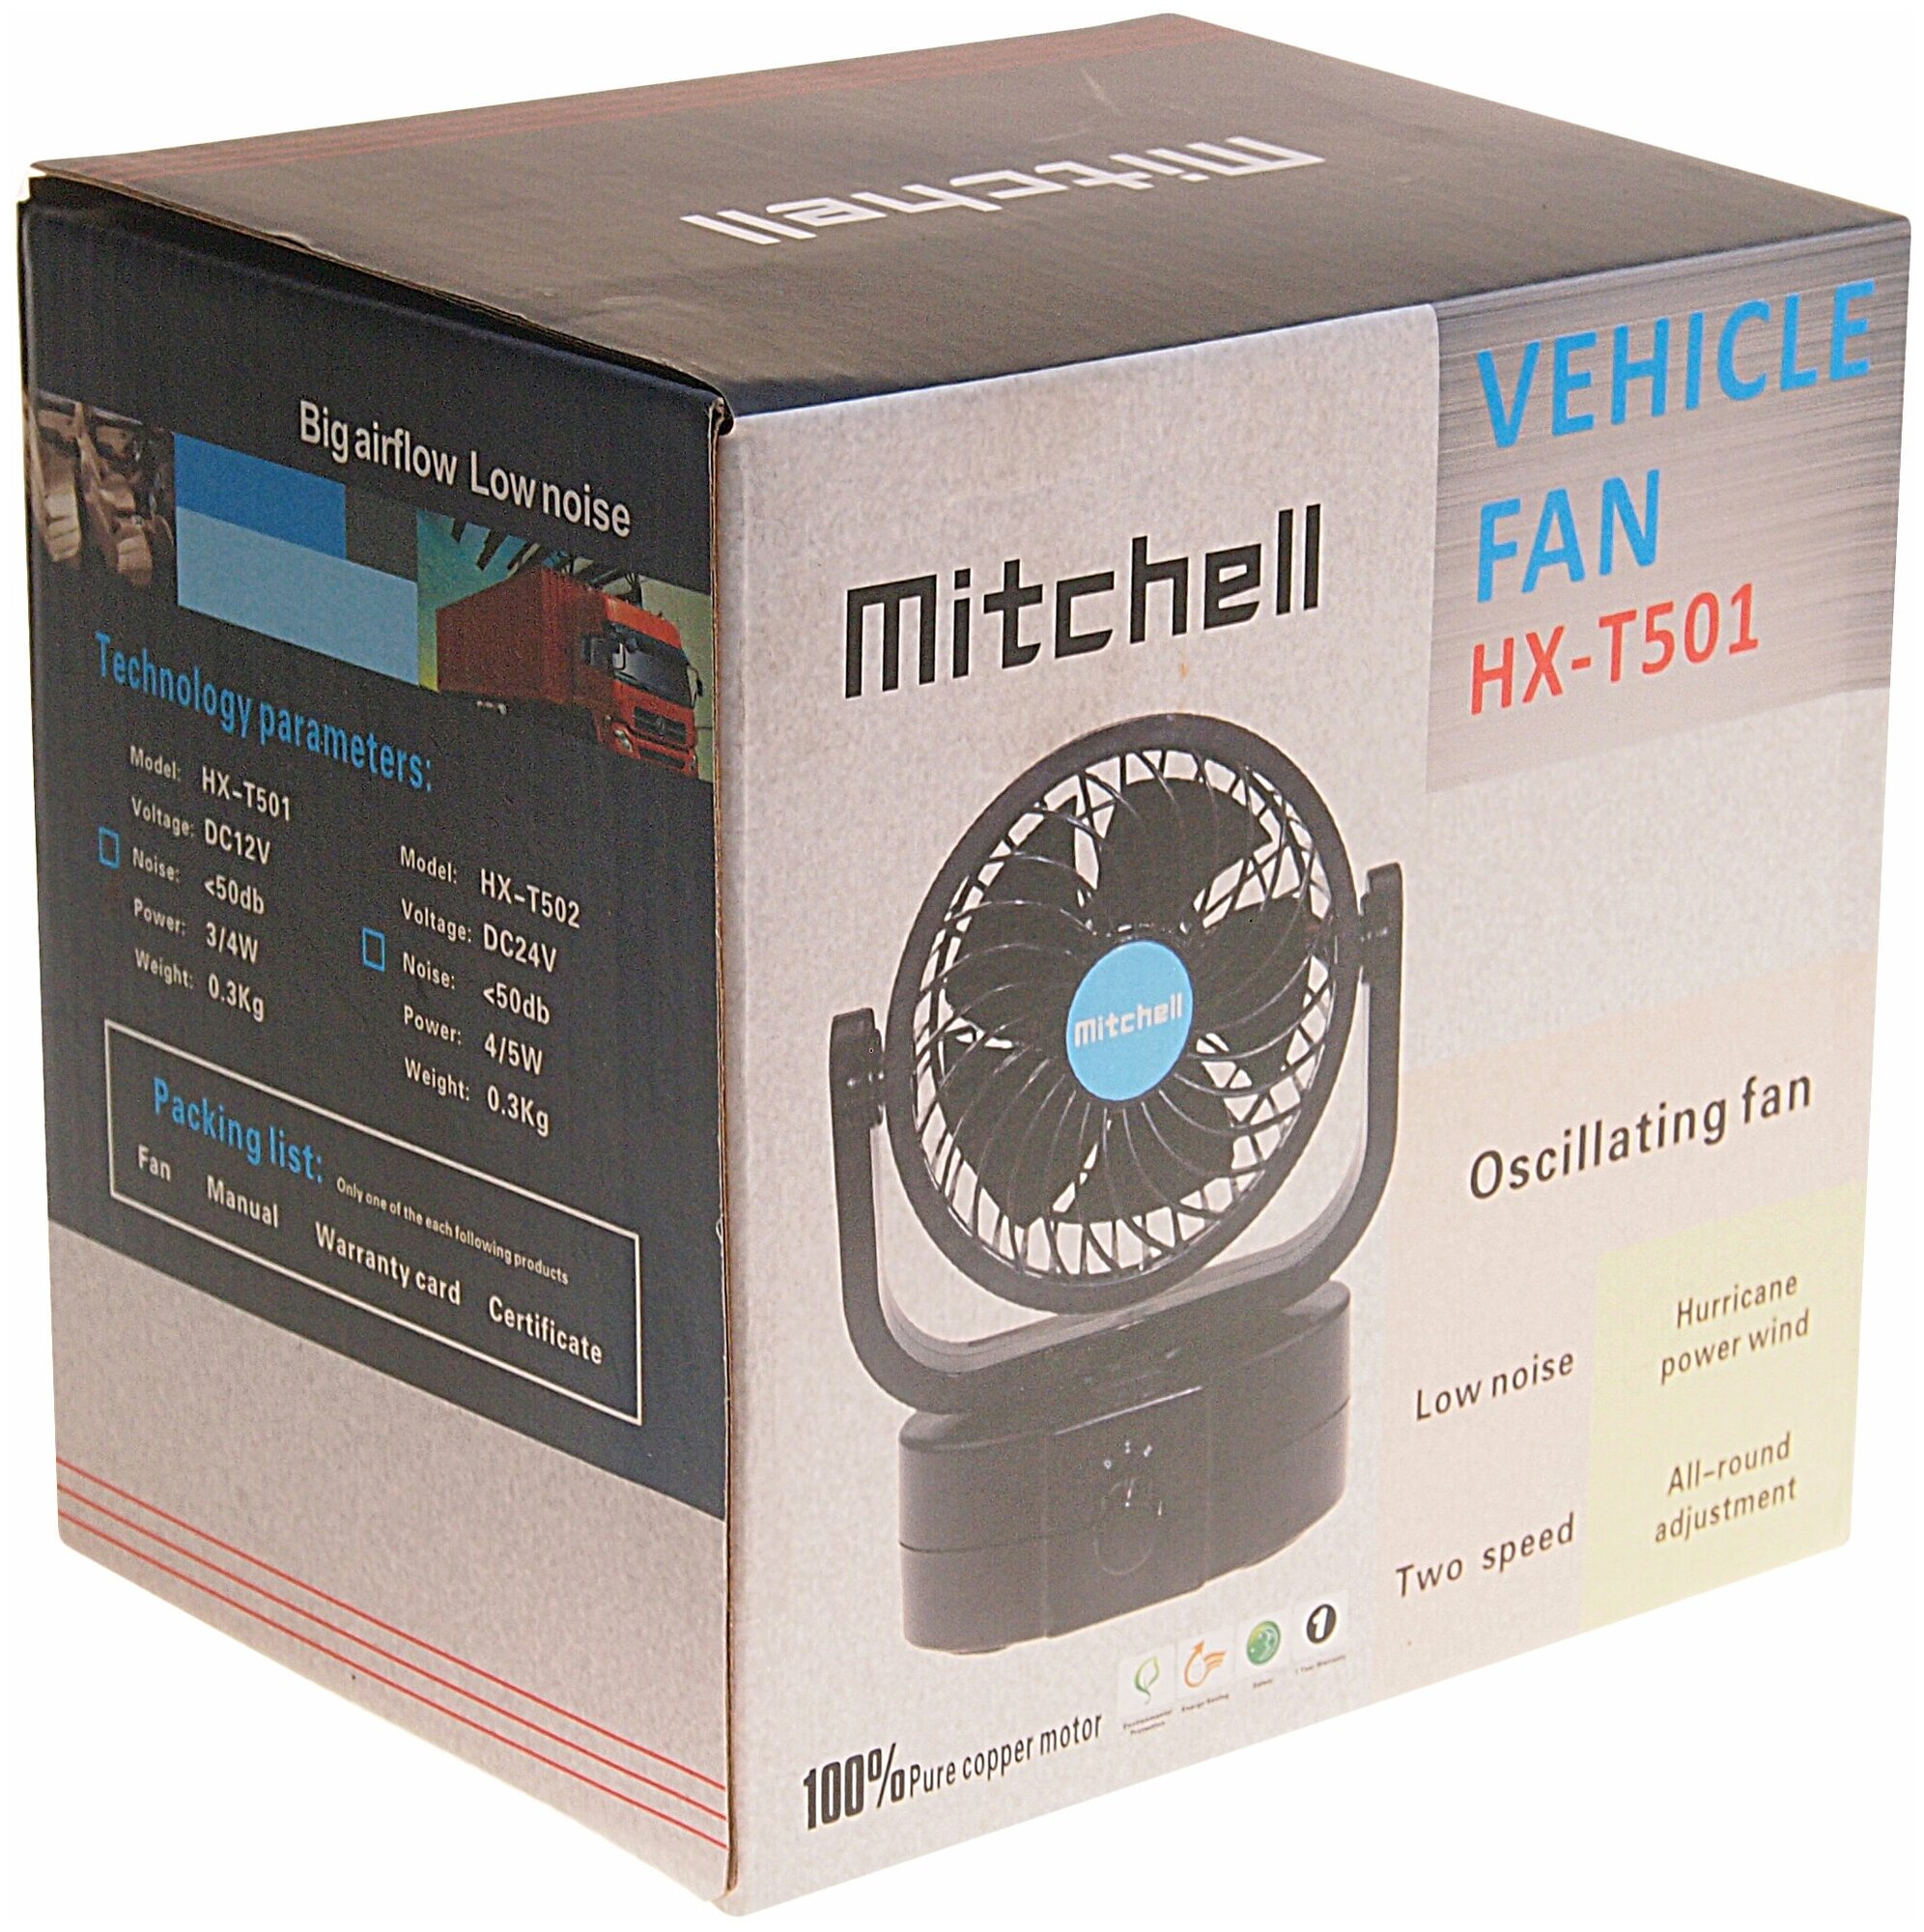 Вентилятор HX-501 10см (4") 12V (3/3.5W) 2-скорости, автовращение, с регулируемыми углами обдува 360 градусов black/blue MITCHELL - фотография № 3